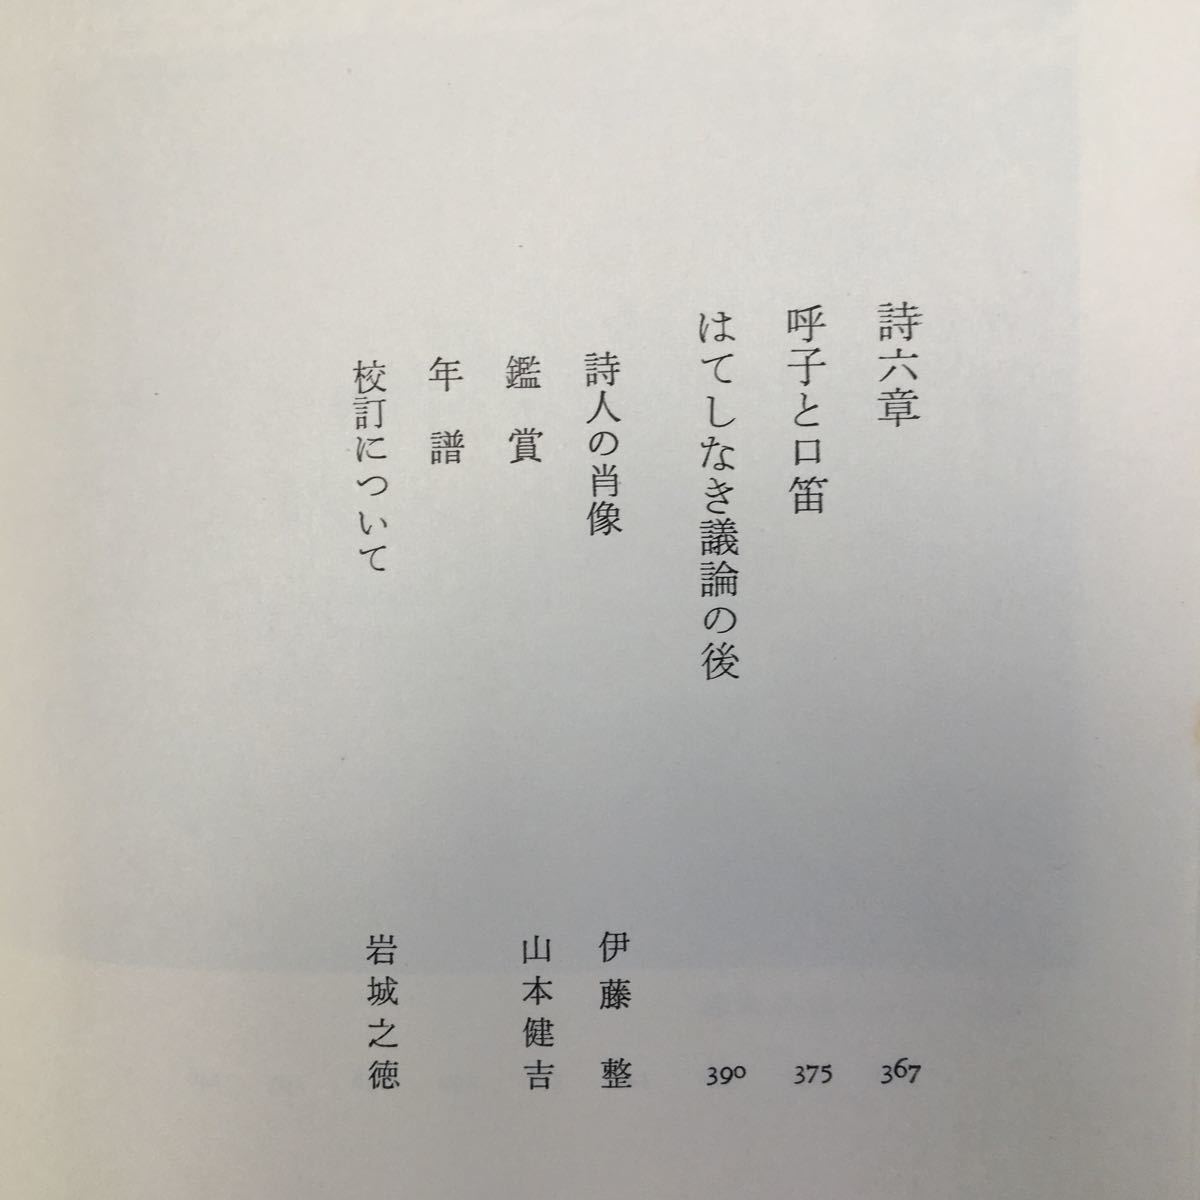 zaa-143★日本の詩歌 (5) 石川啄木 (中央公論新社)単行本 1974/8/10